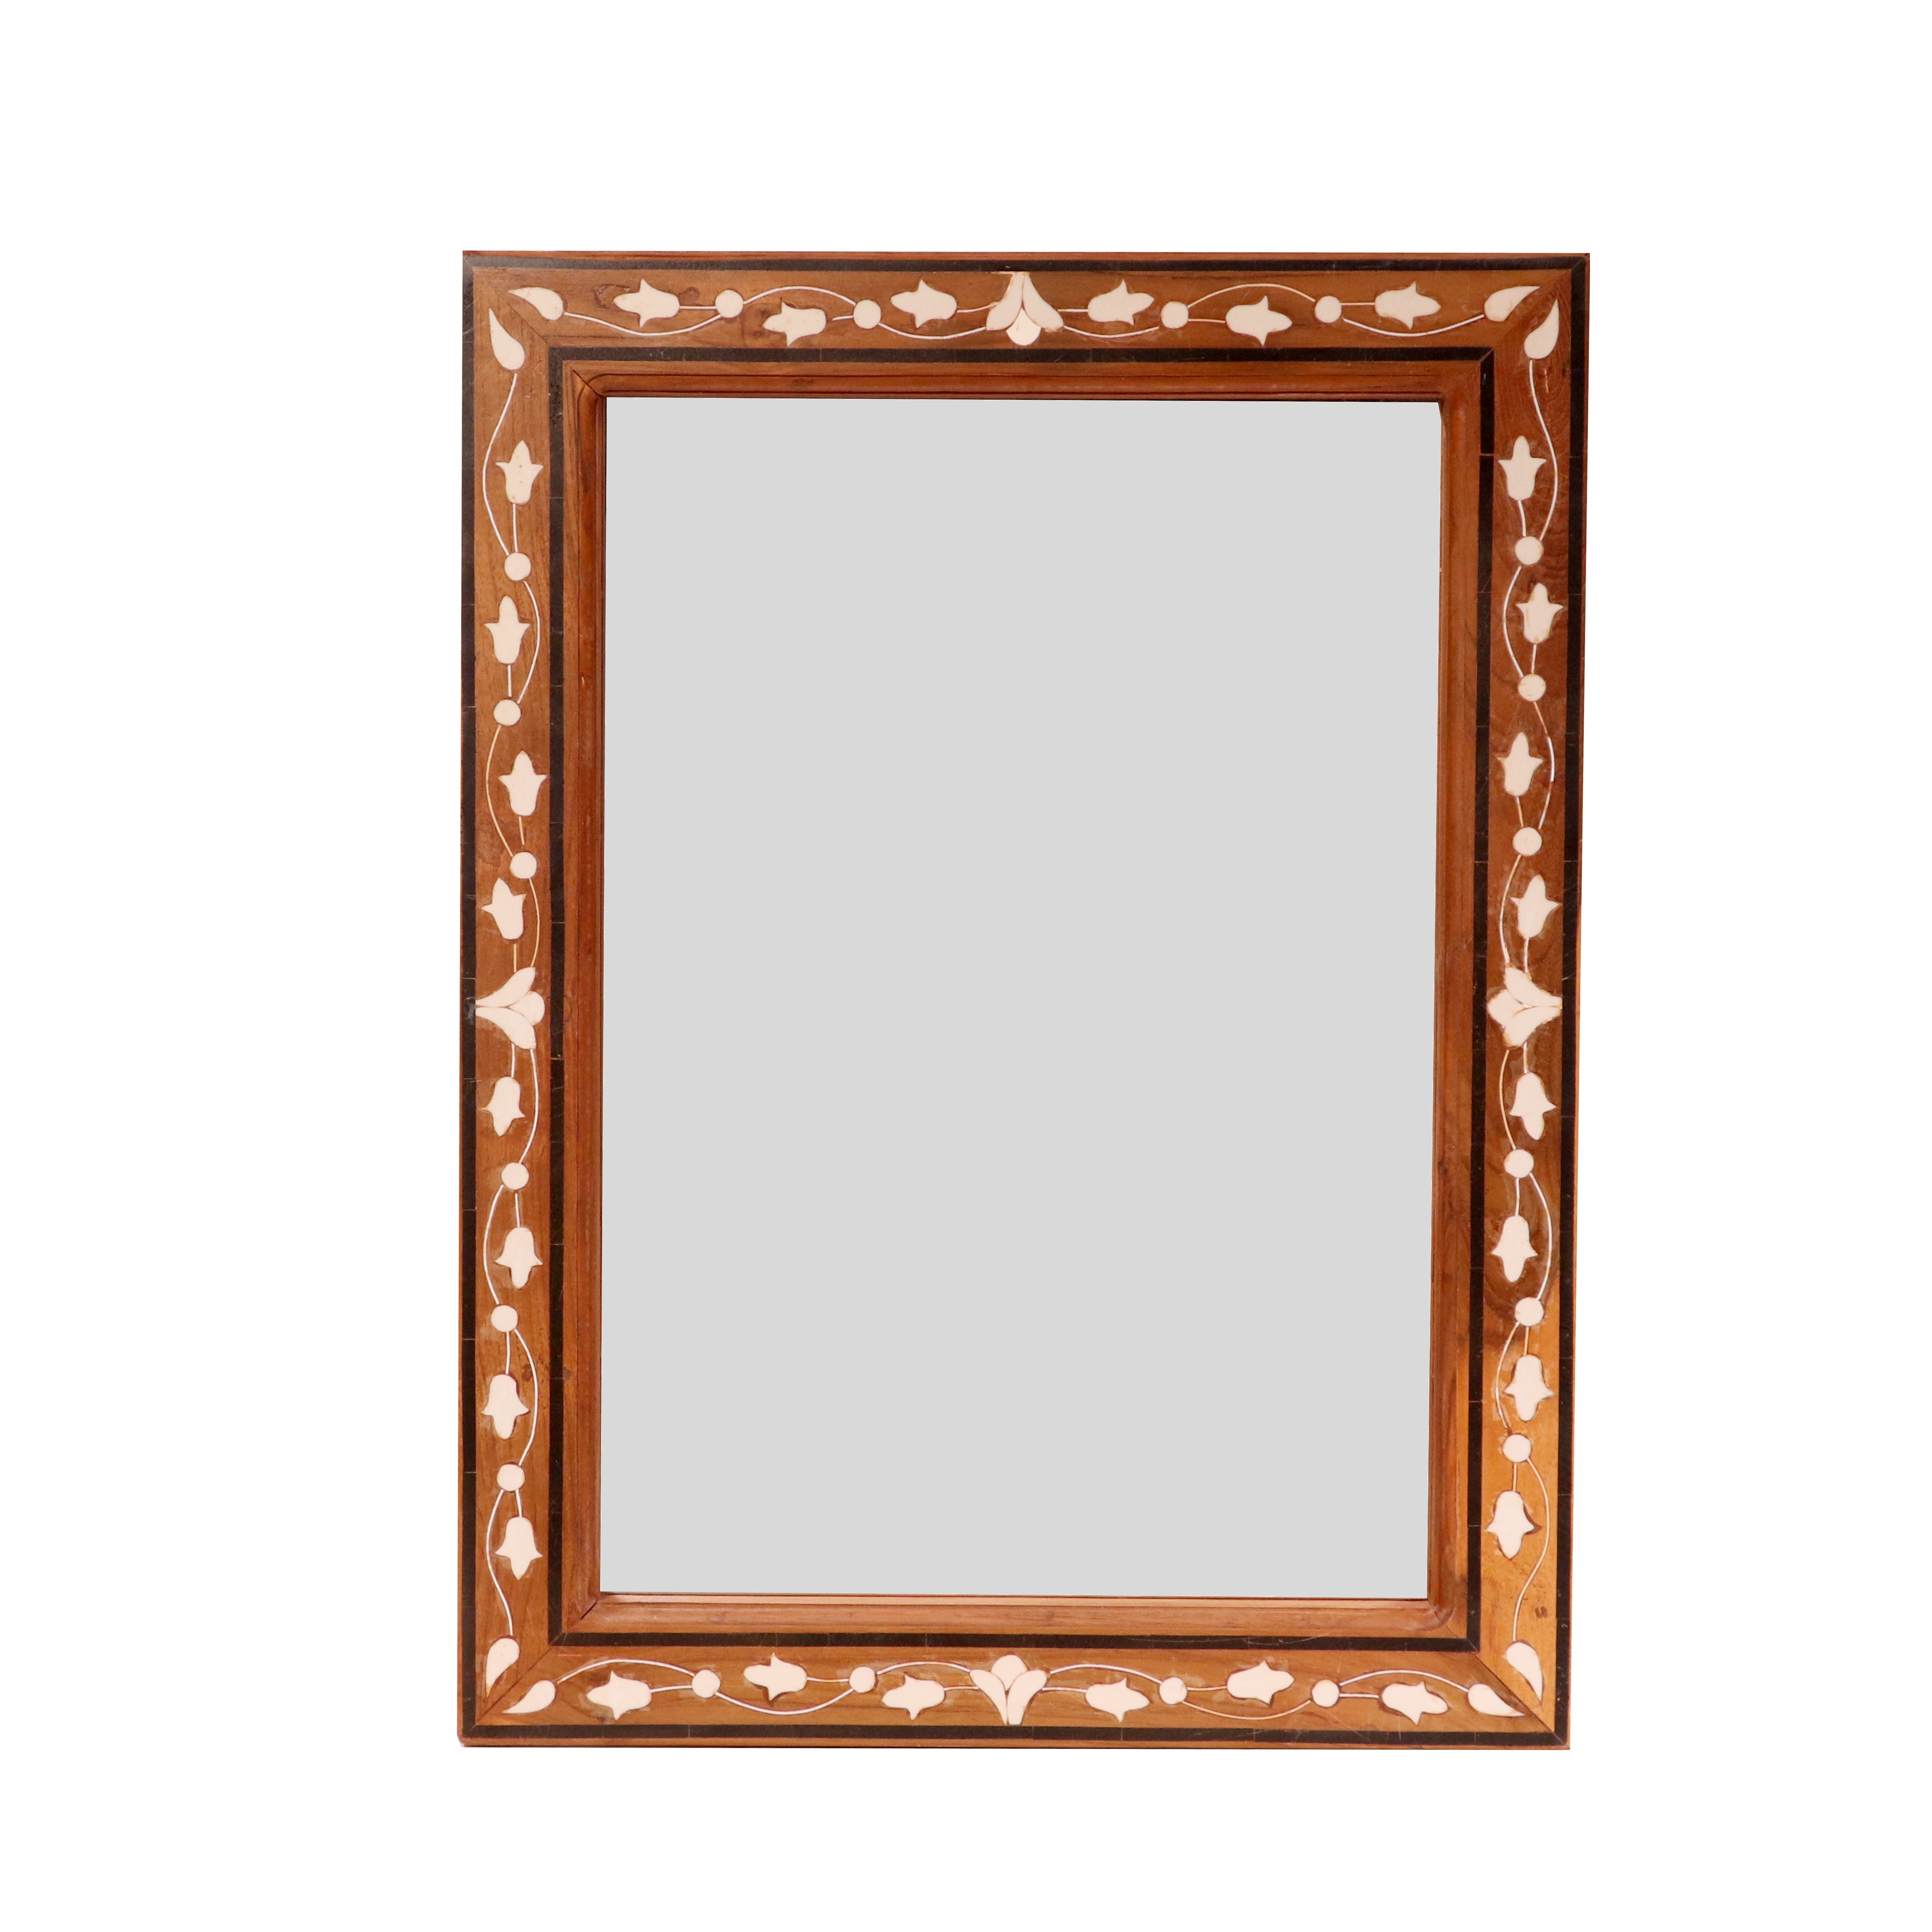 Classic Irish Inlay Border Designed Wooden Handmade Mirror Mirror